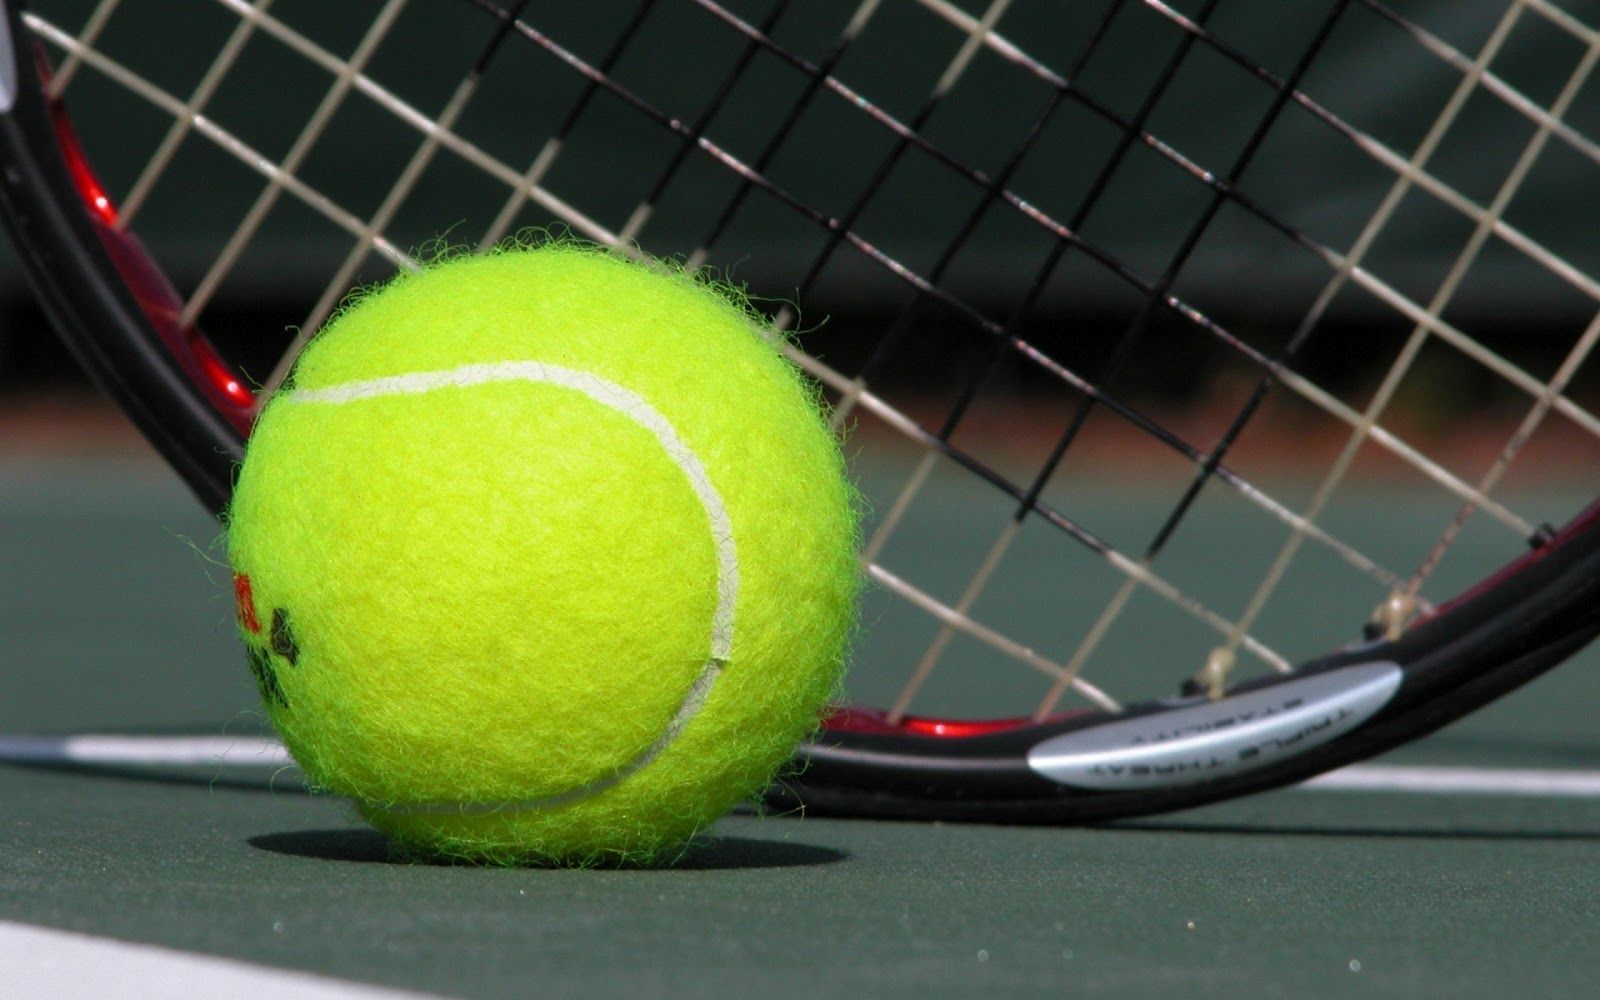 Sports Wallpaper, Background, Image. Design Trends. Tennis ball, Tennis, Play tennis